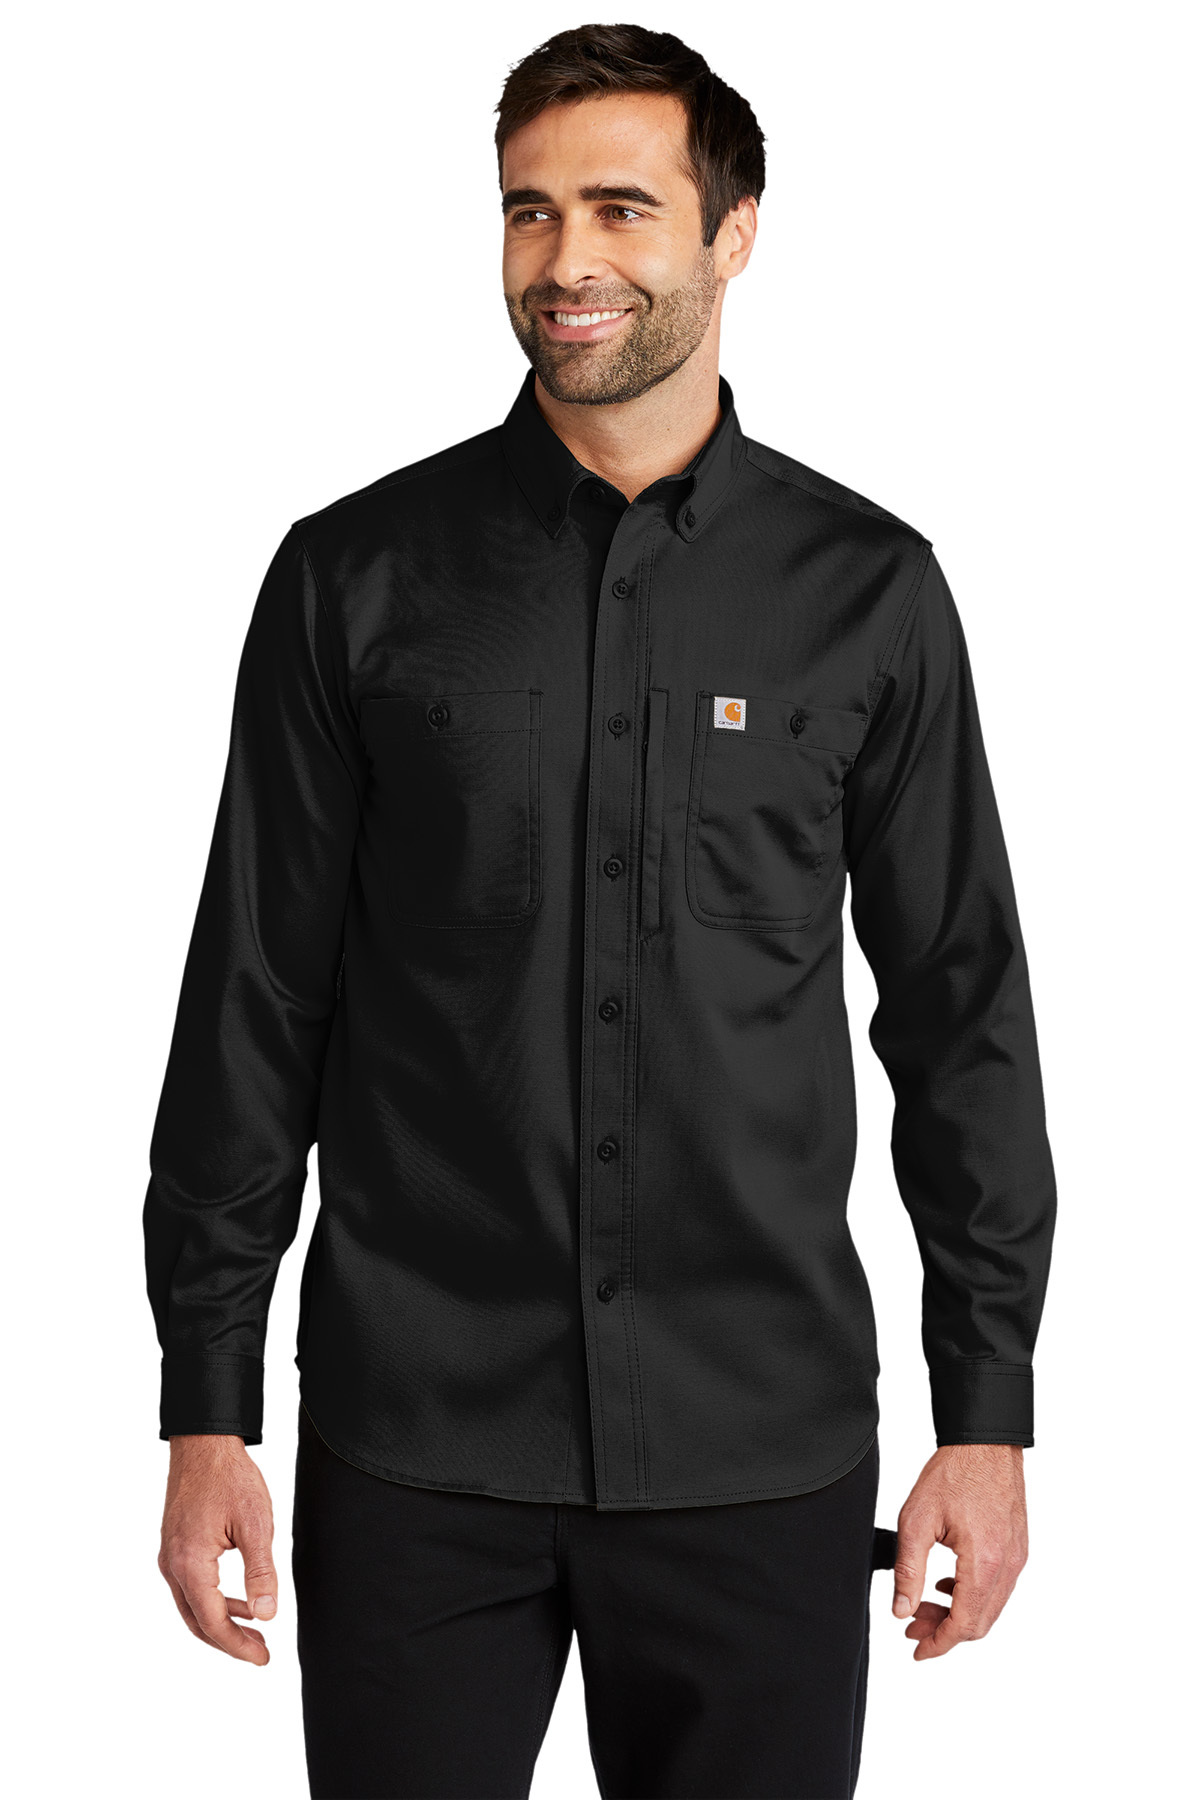 Carhartt Rugged Professional Series Long Sleeve Shirt, Product